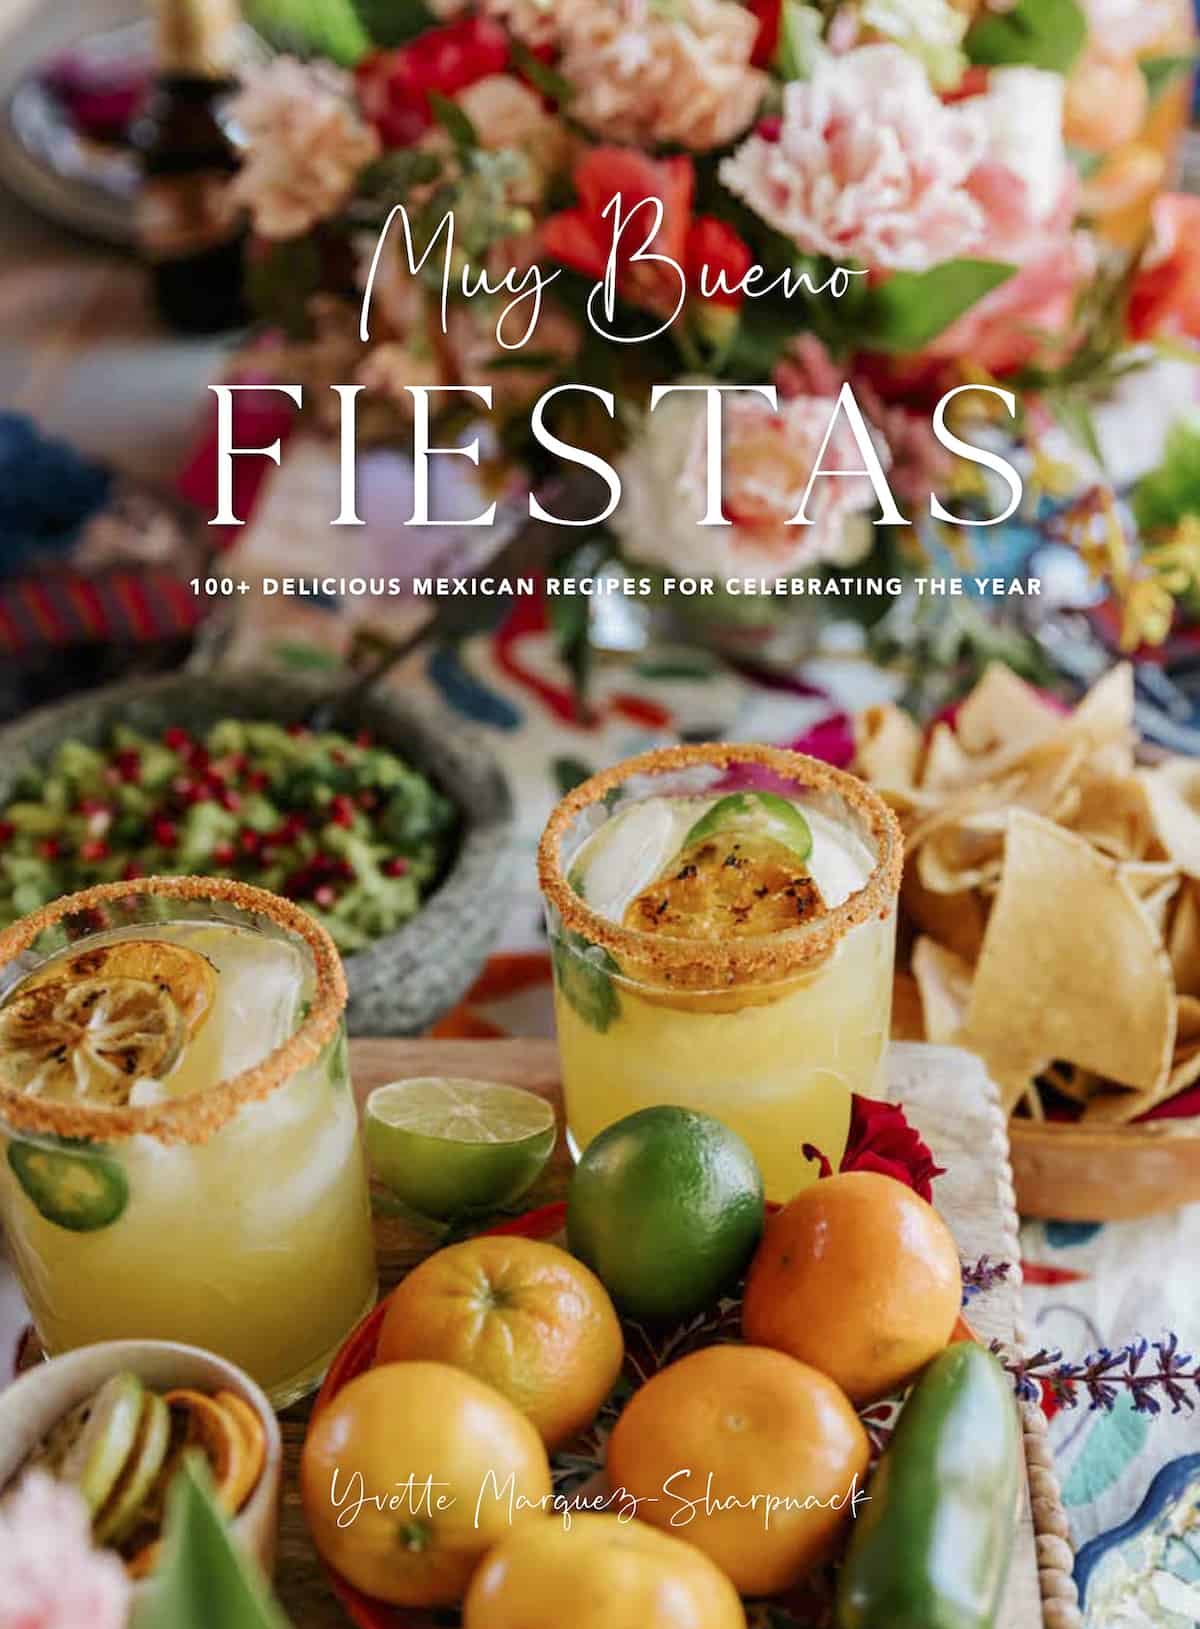 Cover of "Muy Bueno Fiestas" cookbook.